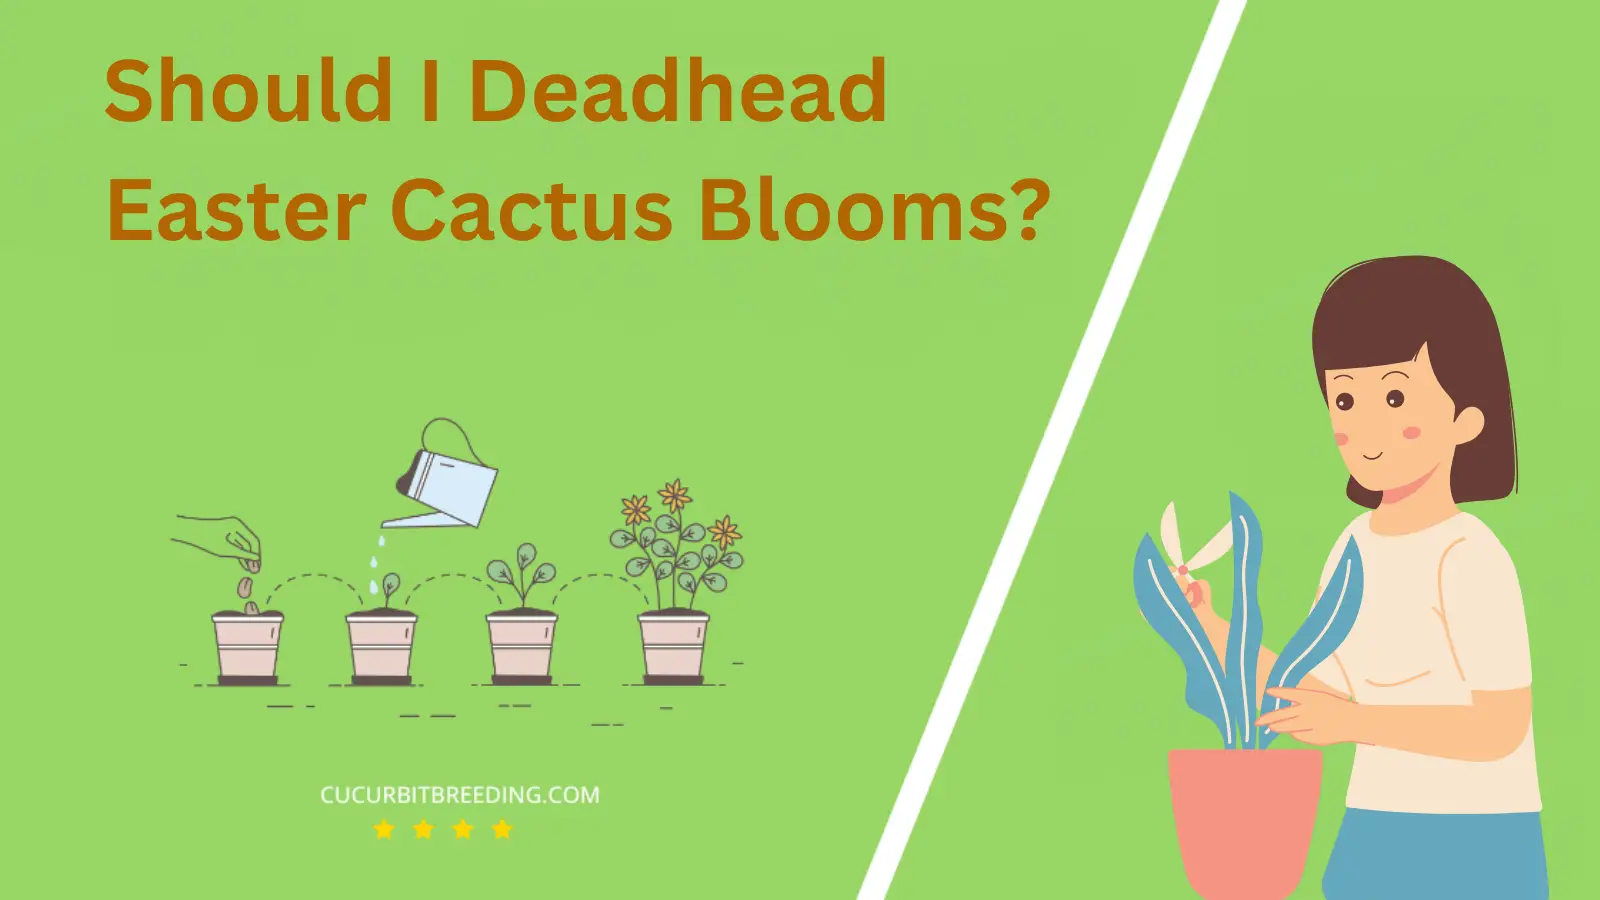 Should I Deadhead Easter Cactus Blooms?